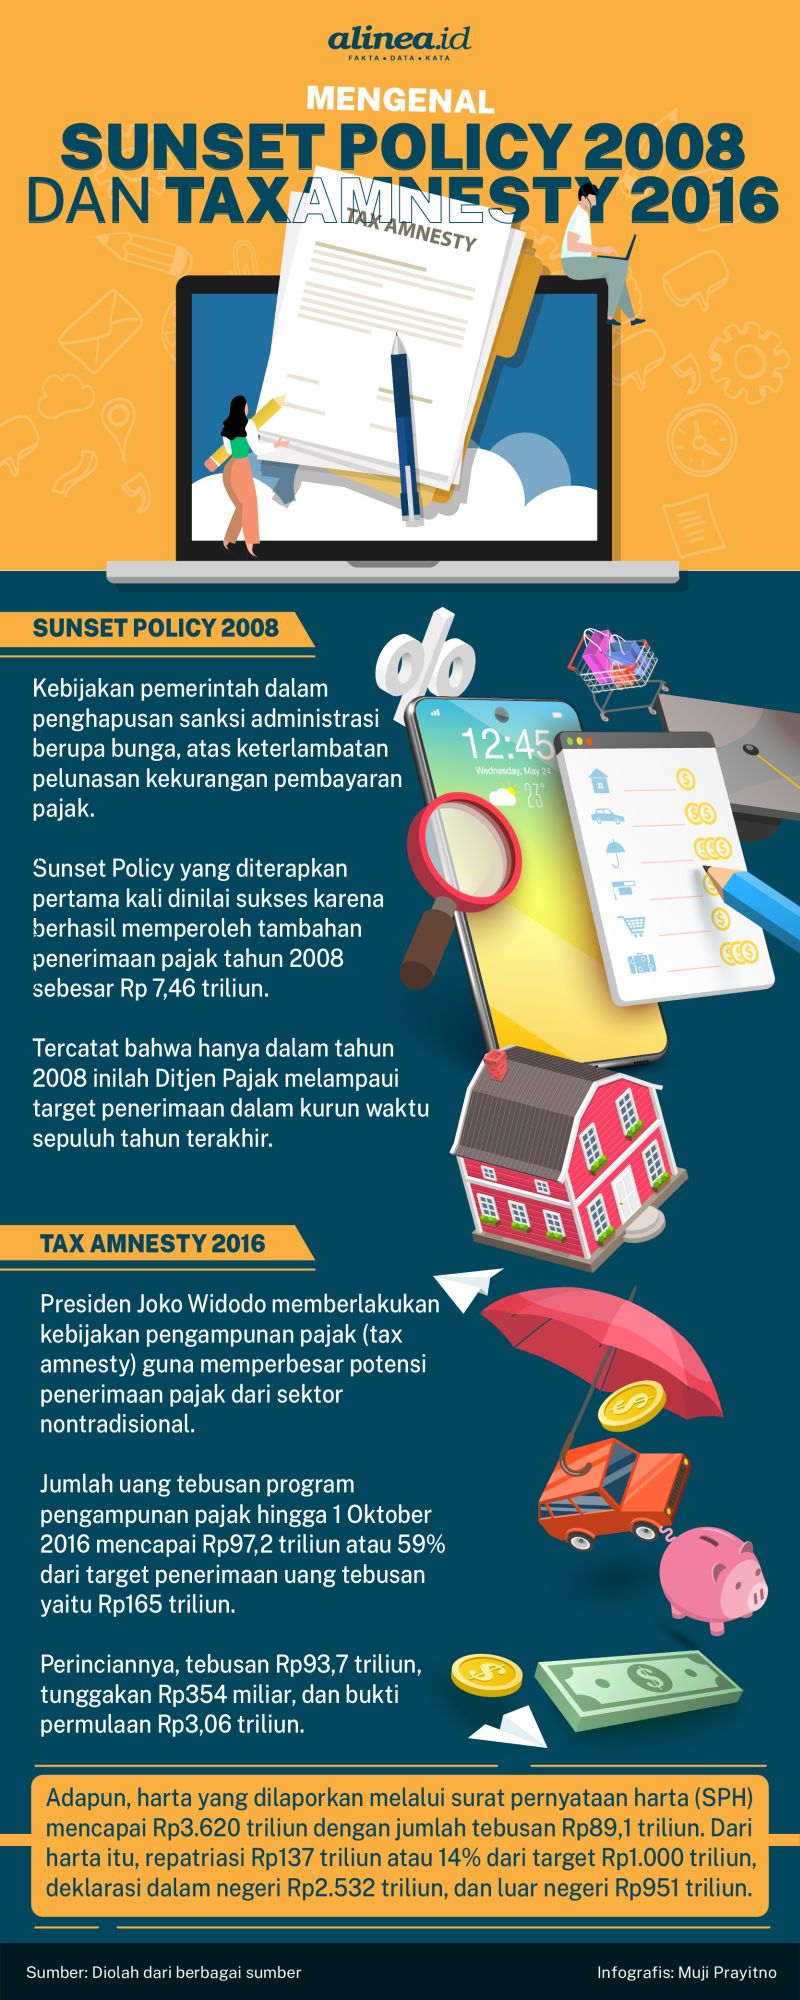 Tax amnesty versus sunset policy